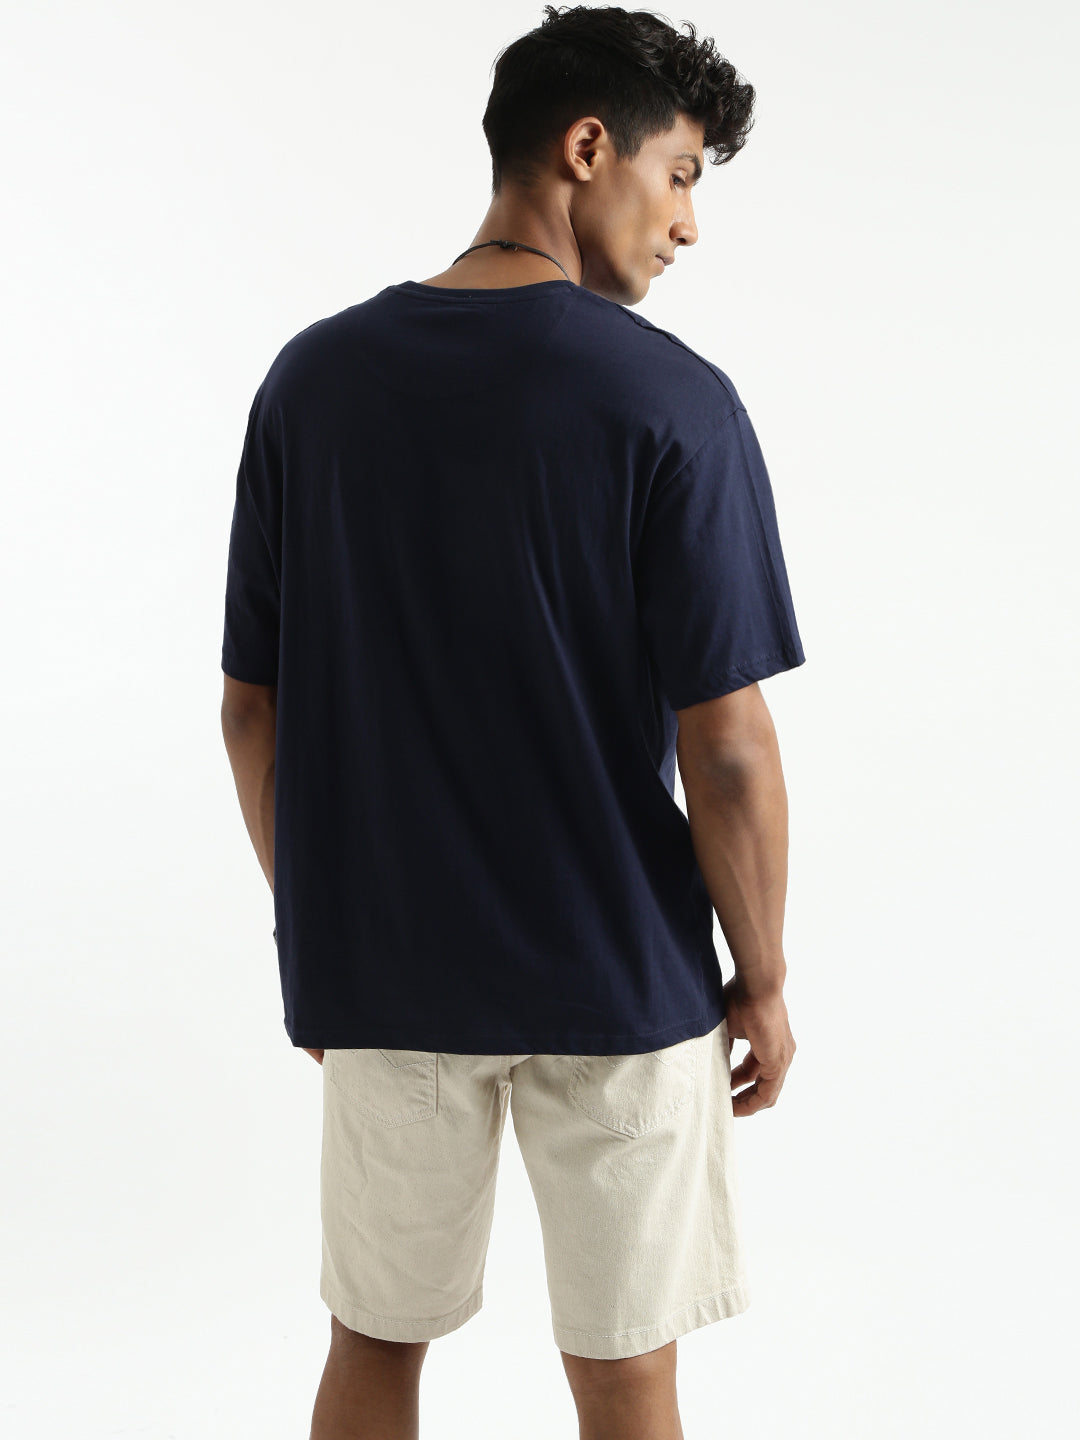 Wrogn X Spoyl Navy Blue T-Shirt